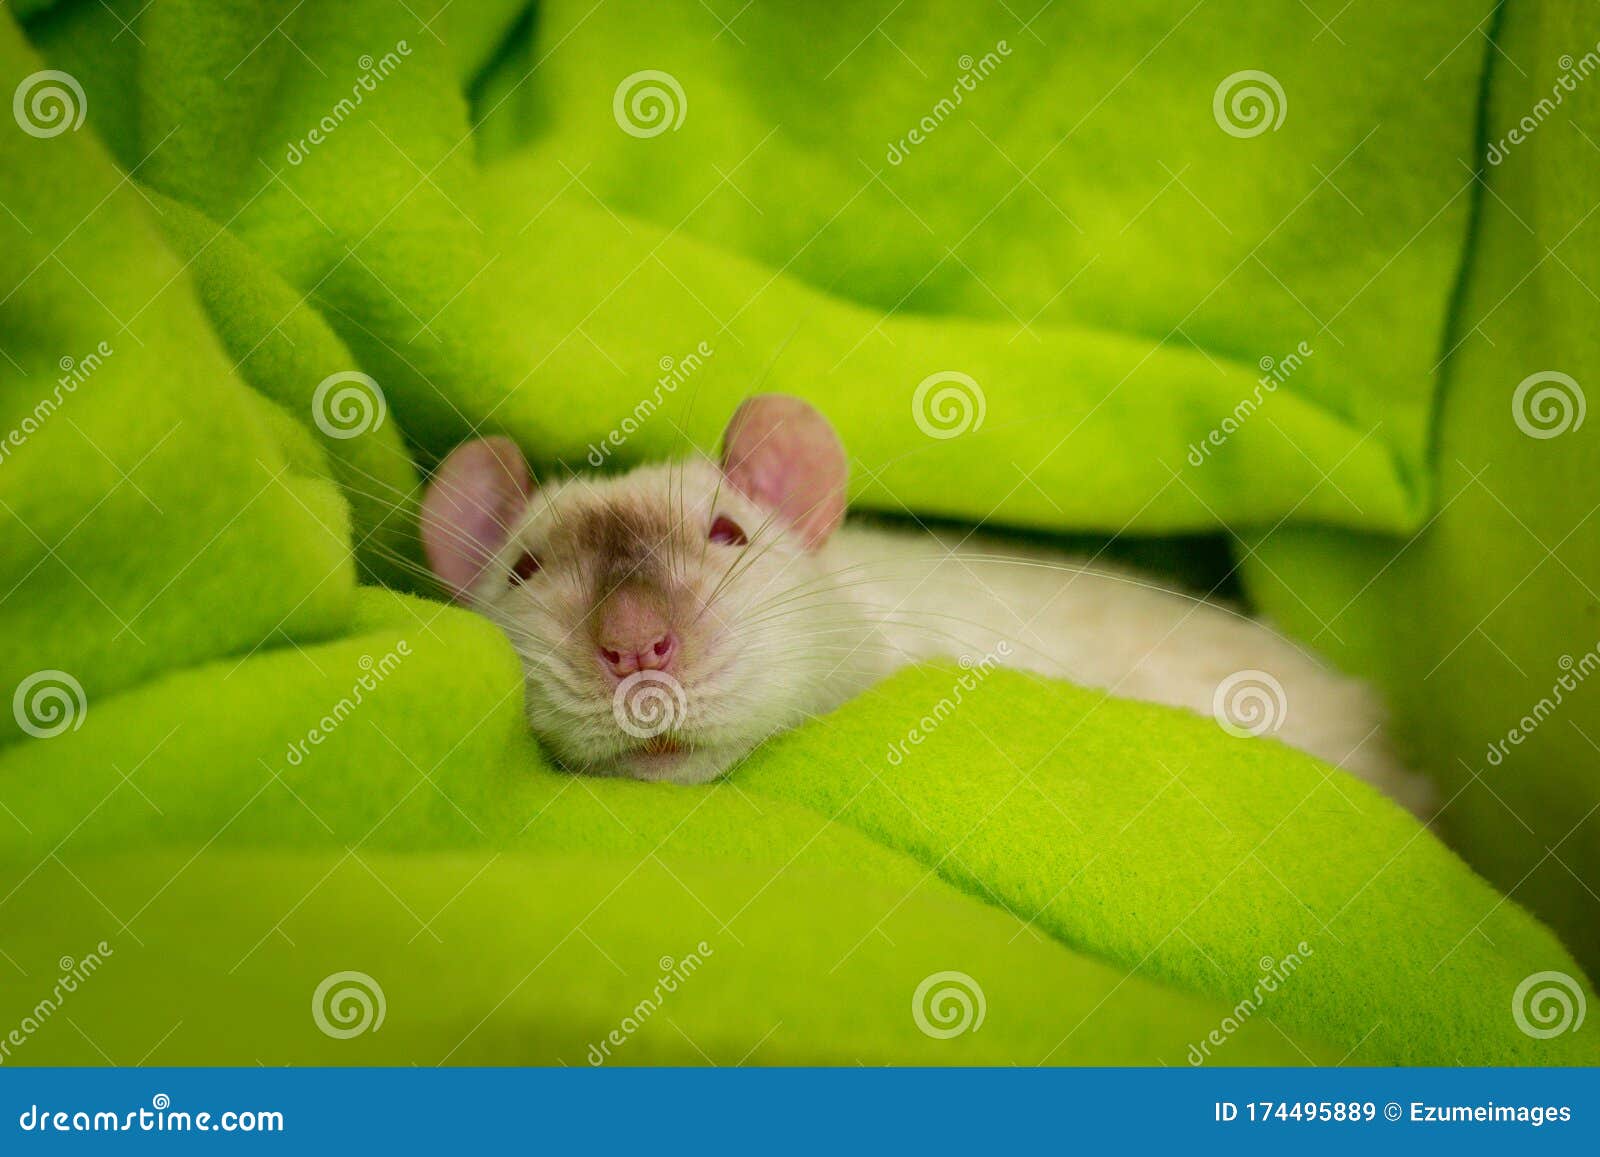 fancy-pet-siamese-rat-resting-green-blanket-174495889.jpg